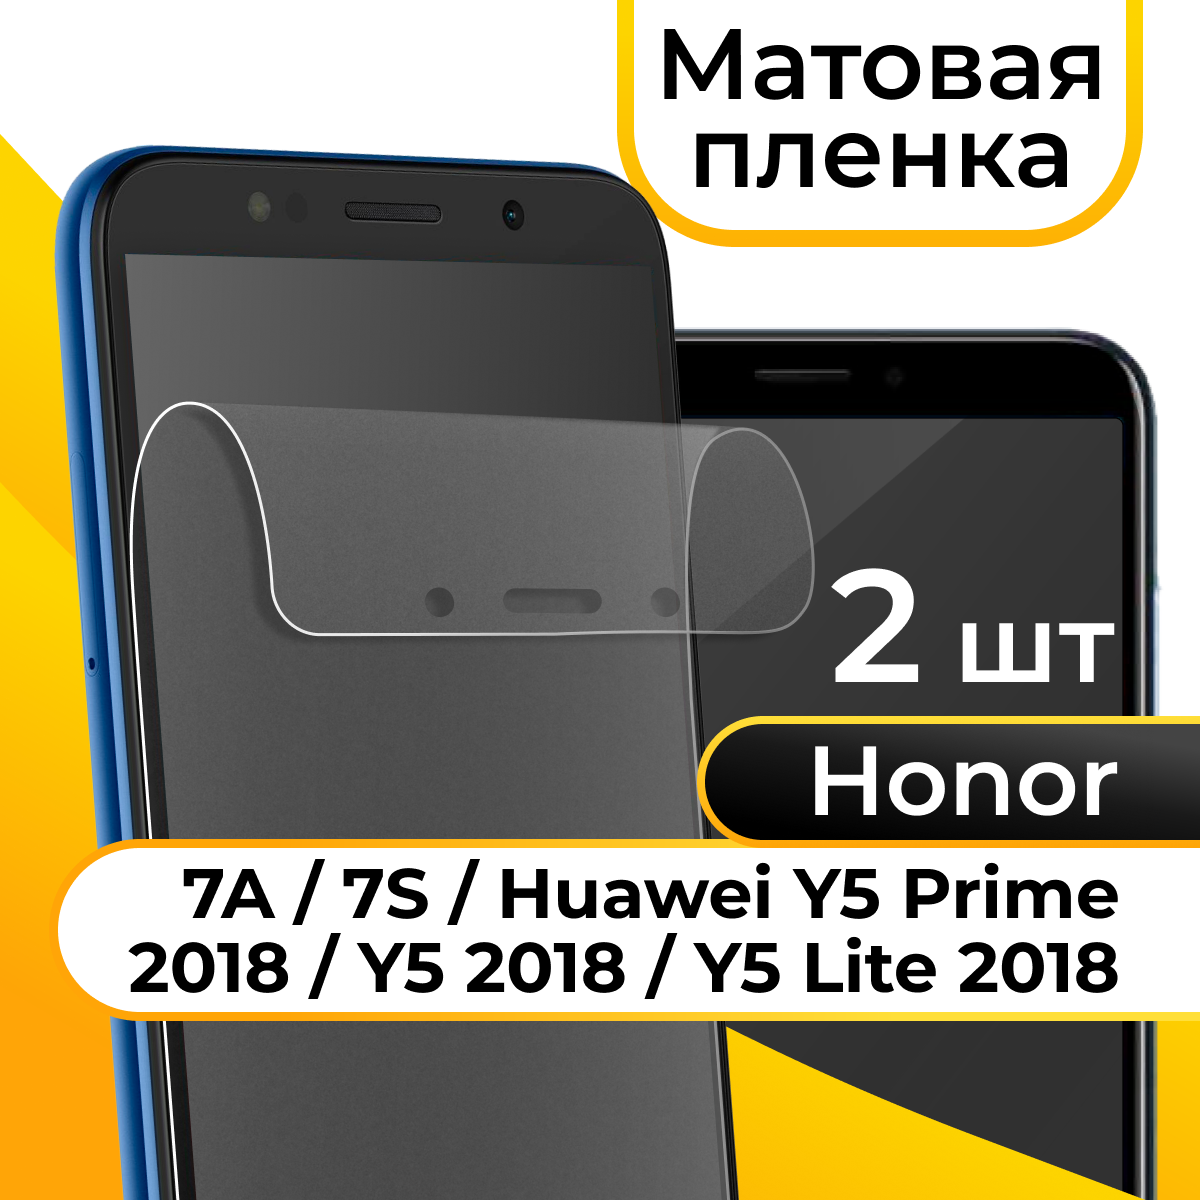 Матовая пленка для Honor 7A 7S и Huawei Y5 Prime Y5 Y5 Lite 2018 / Защитная пленка на телефон Хонор 7А 7С и Хуавей У5 Прайм У5 У5 Лайт 2018